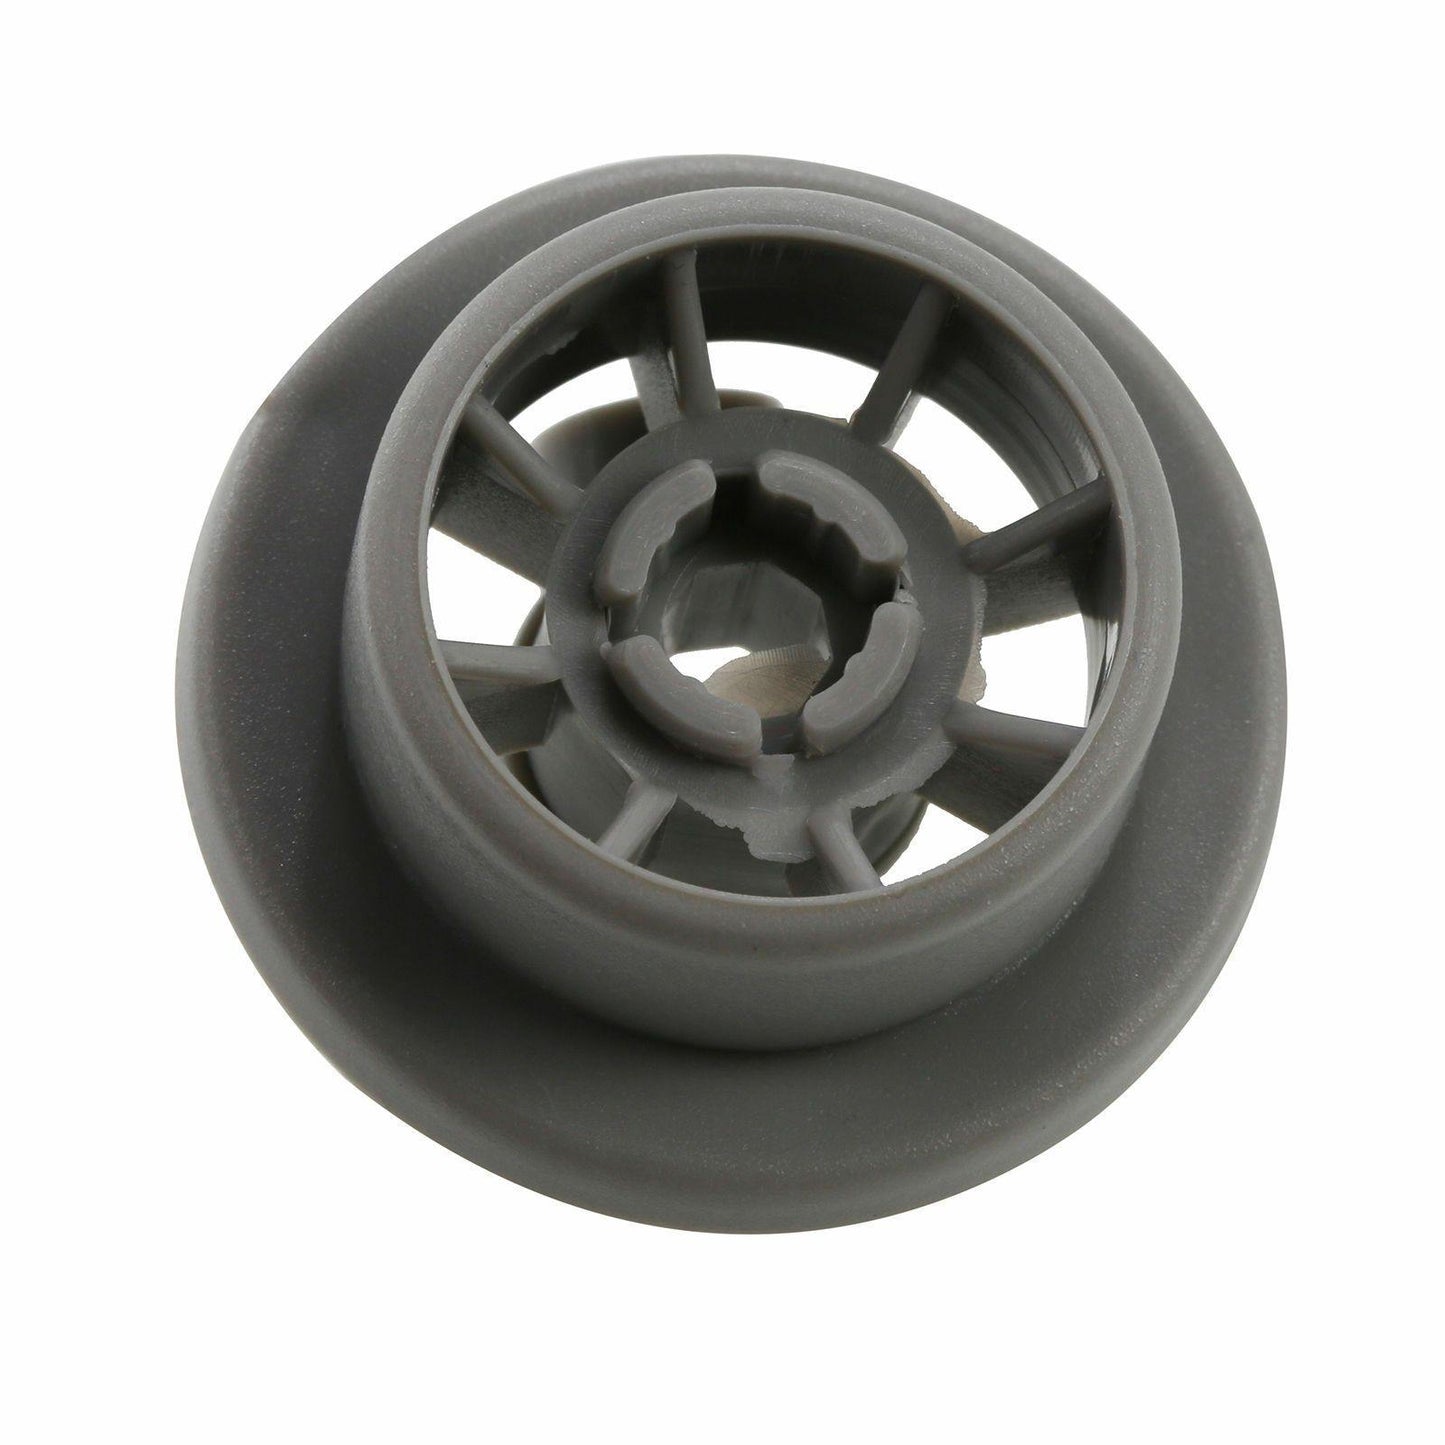 4X Diswasher Lower Bakset Wheel For Bosch SMS46GI02A SMP66MX01A SMS40E08AU Sparesbarn